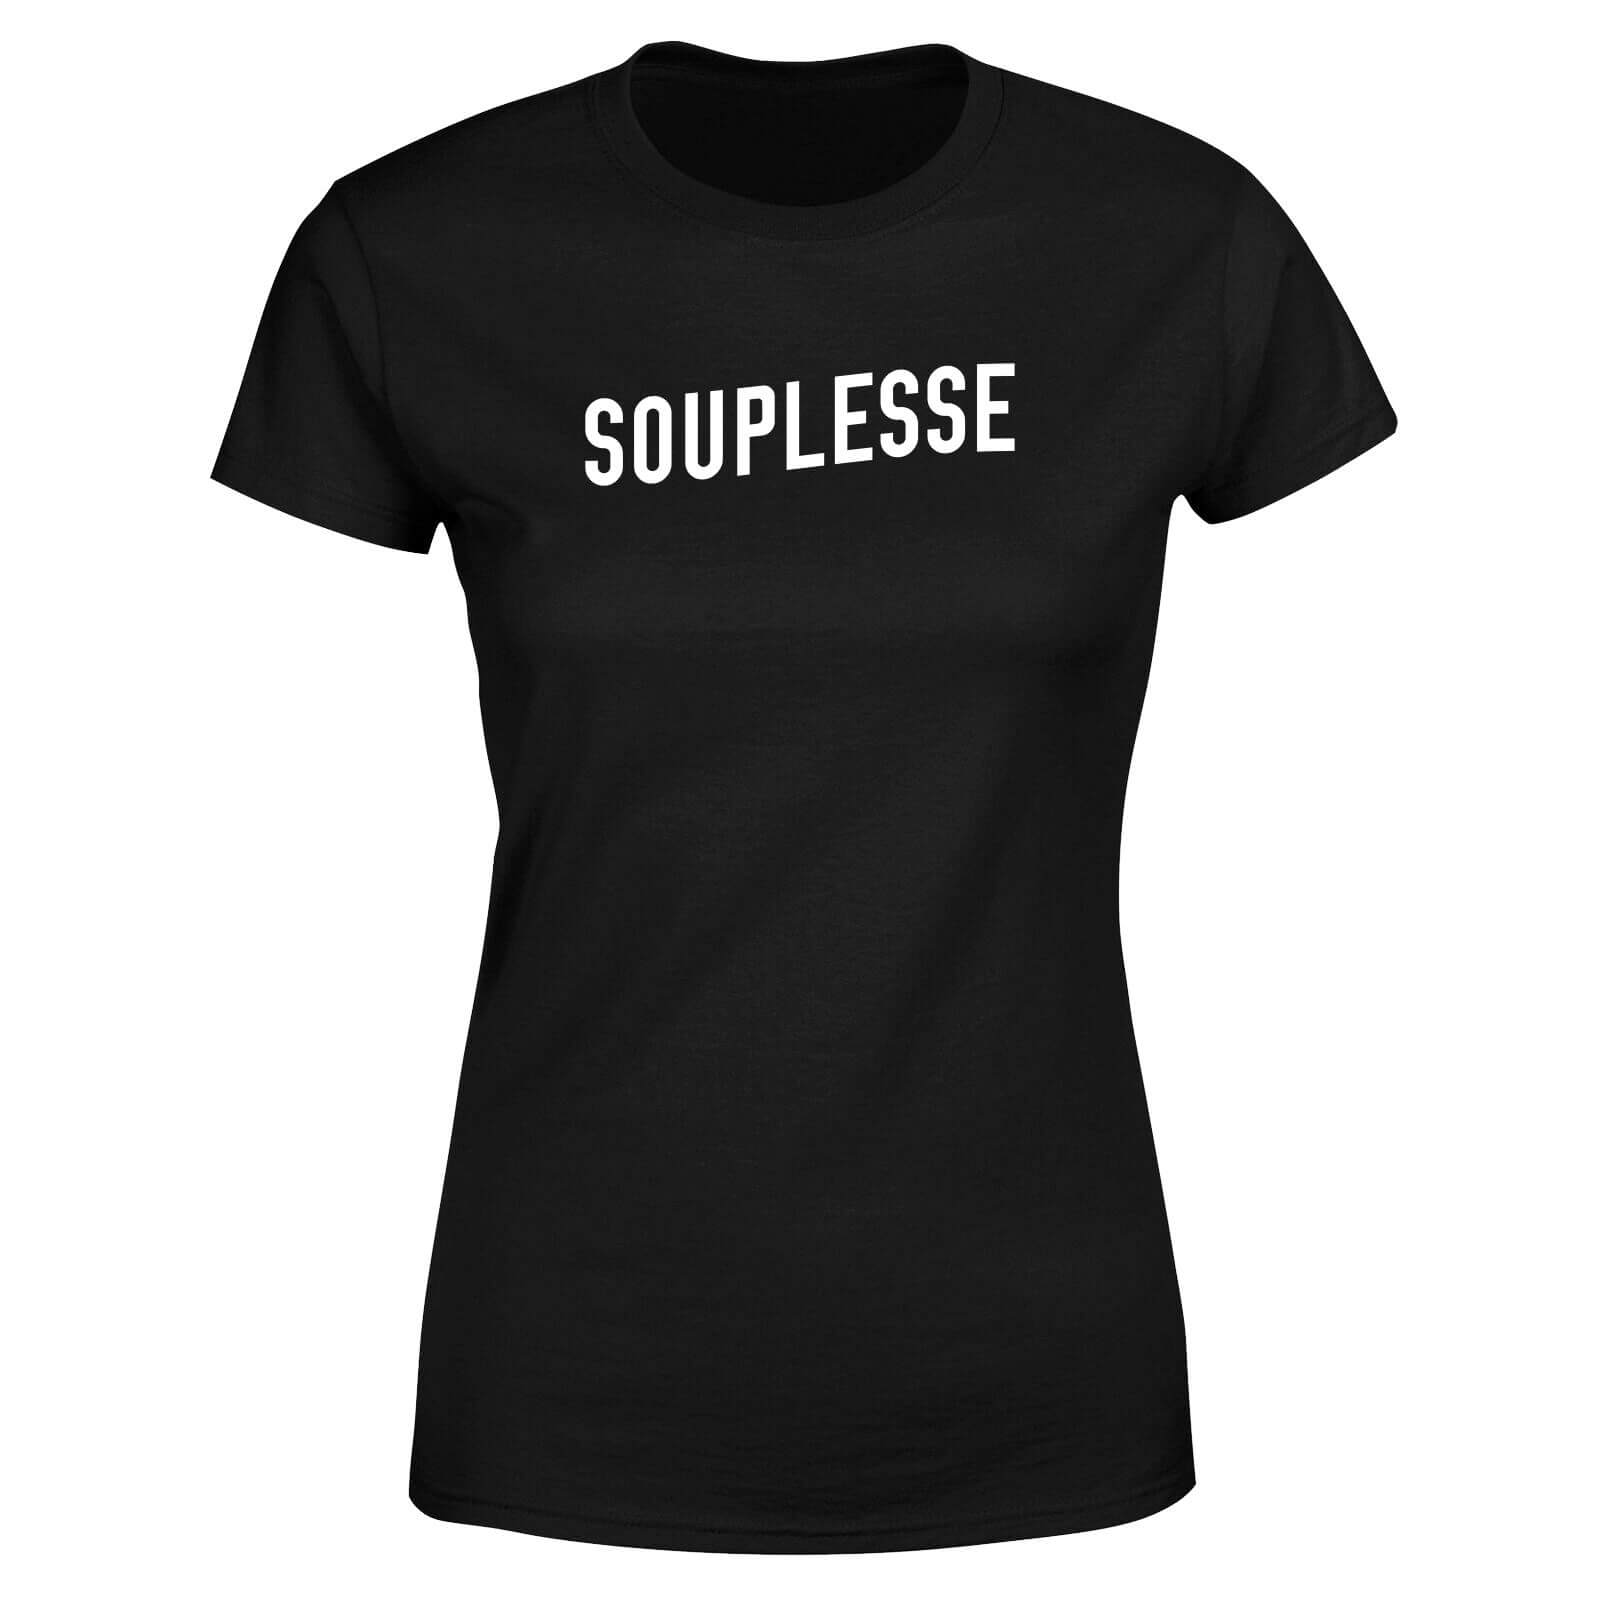 Souplesse Women's T-Shirt - Black - XXL - Black